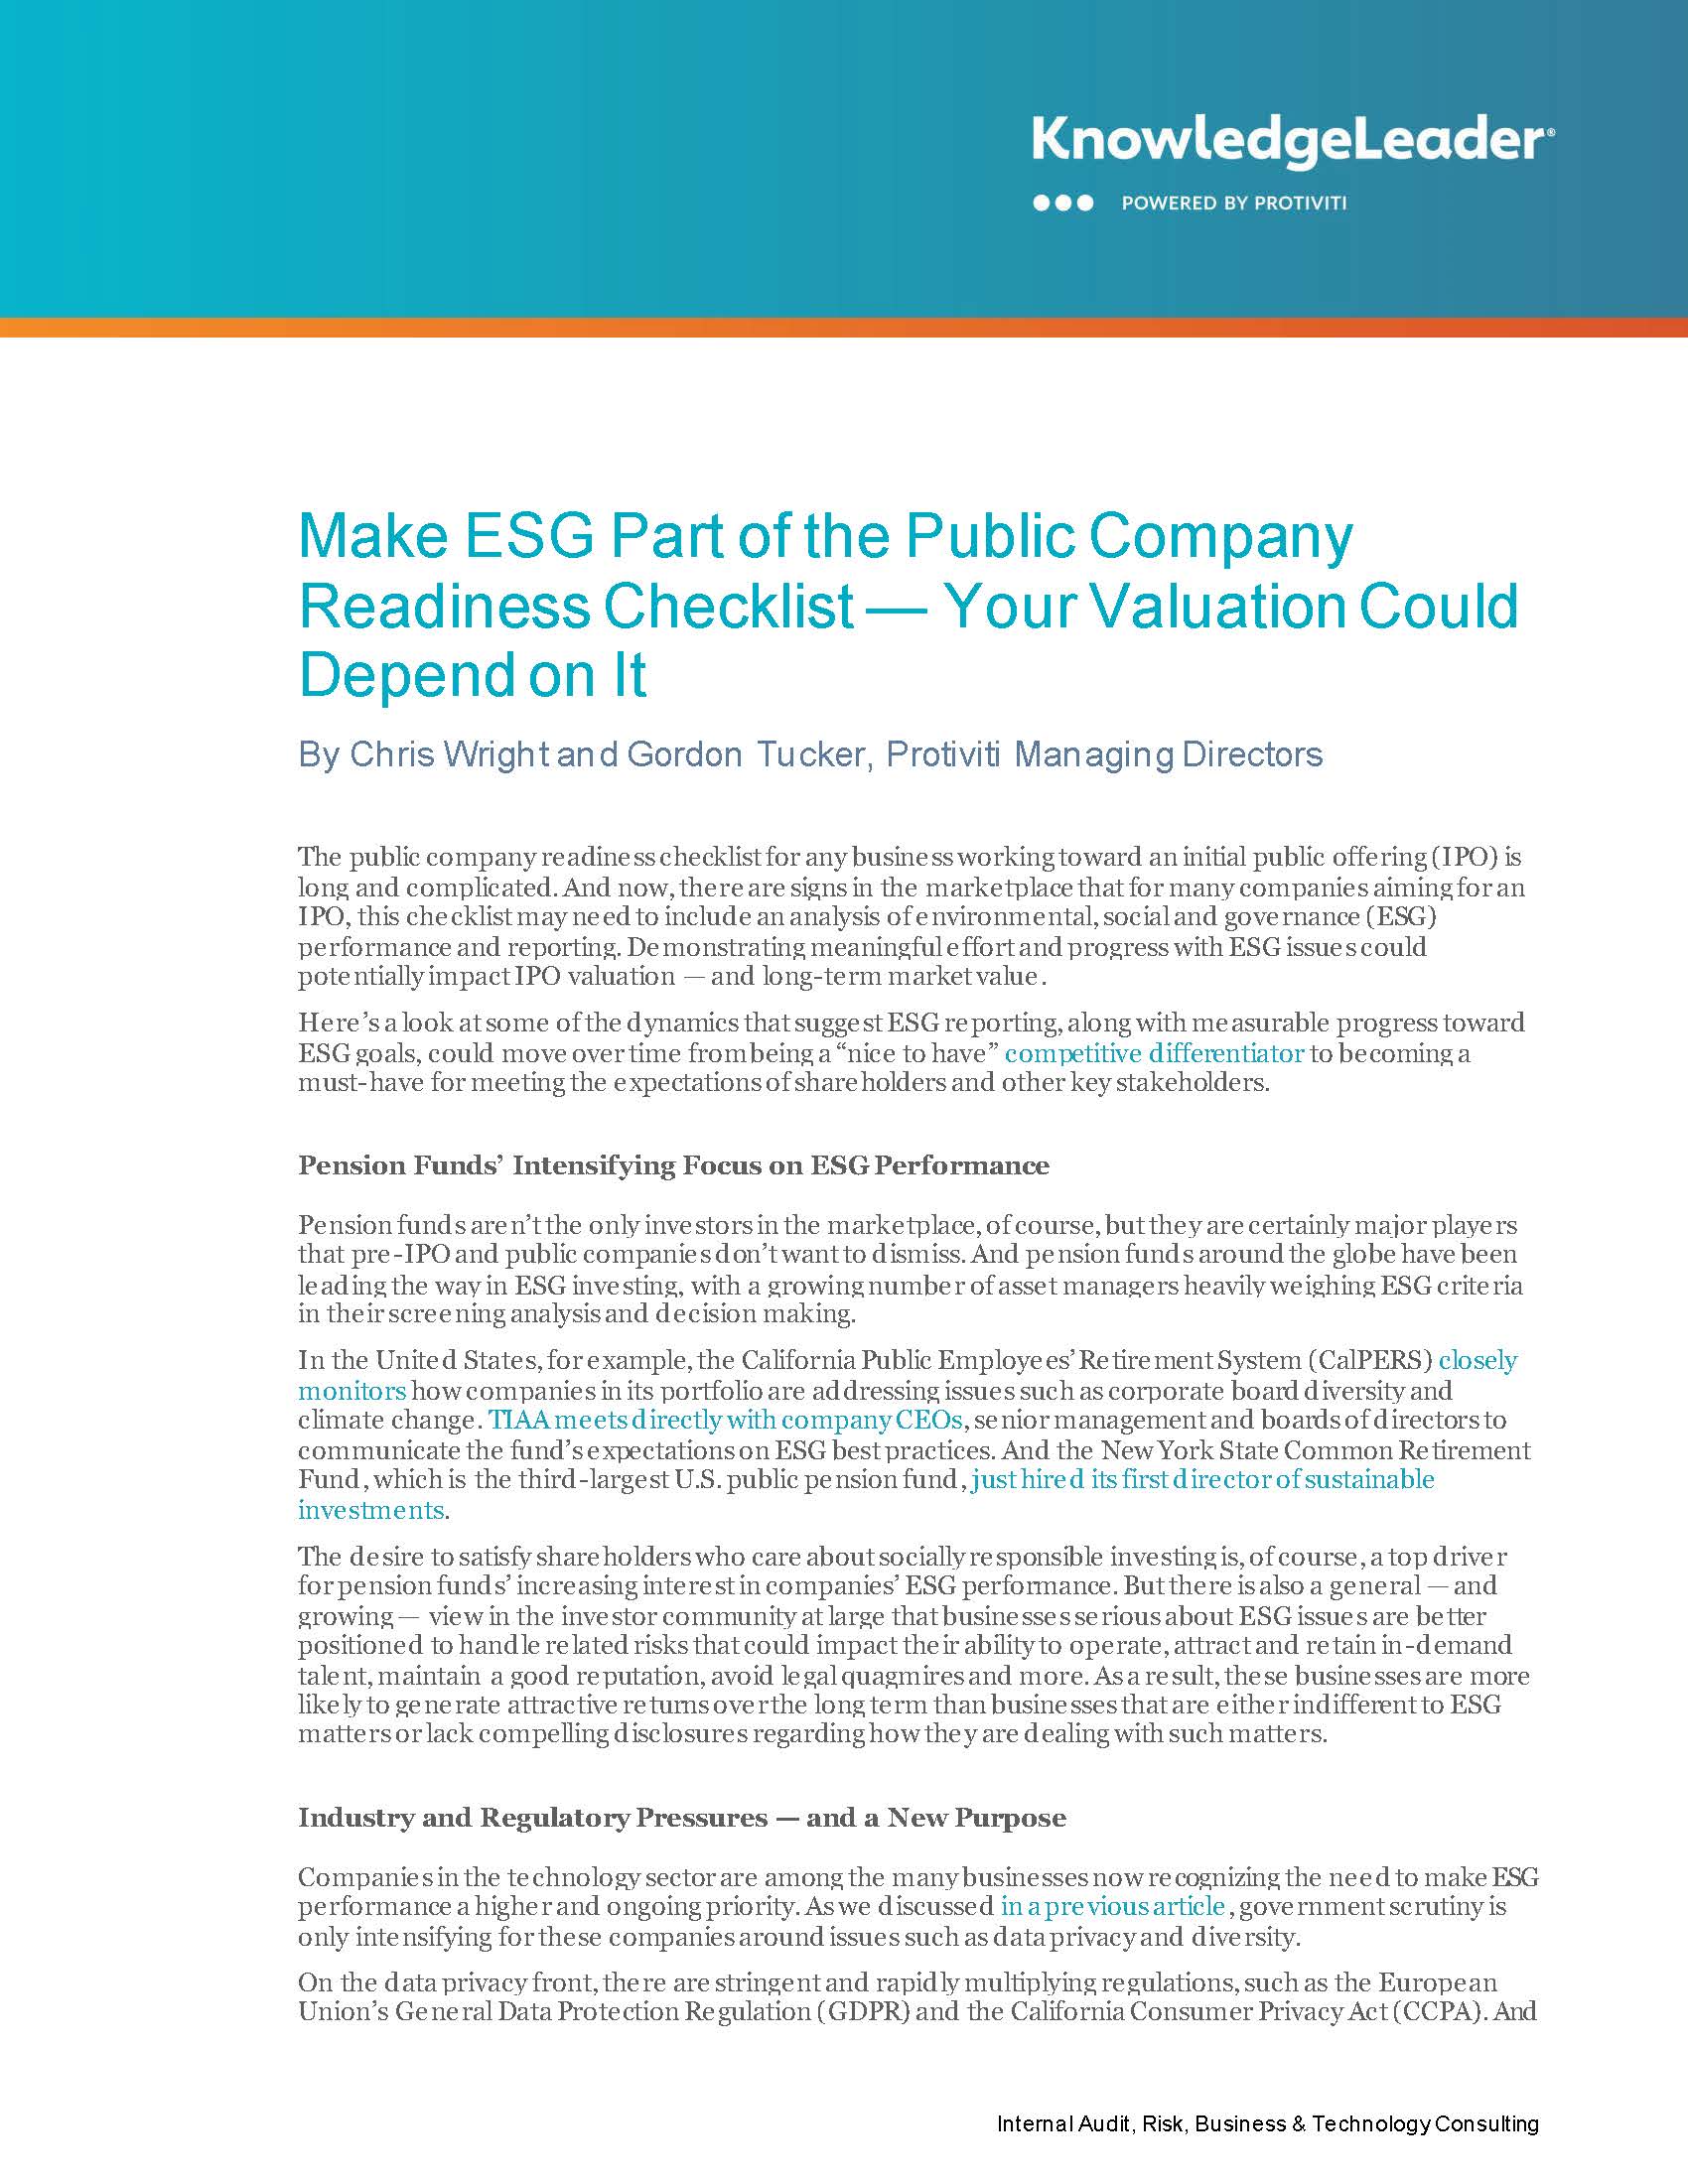 Make ESG Part of the Public Company Readiness Checklist 